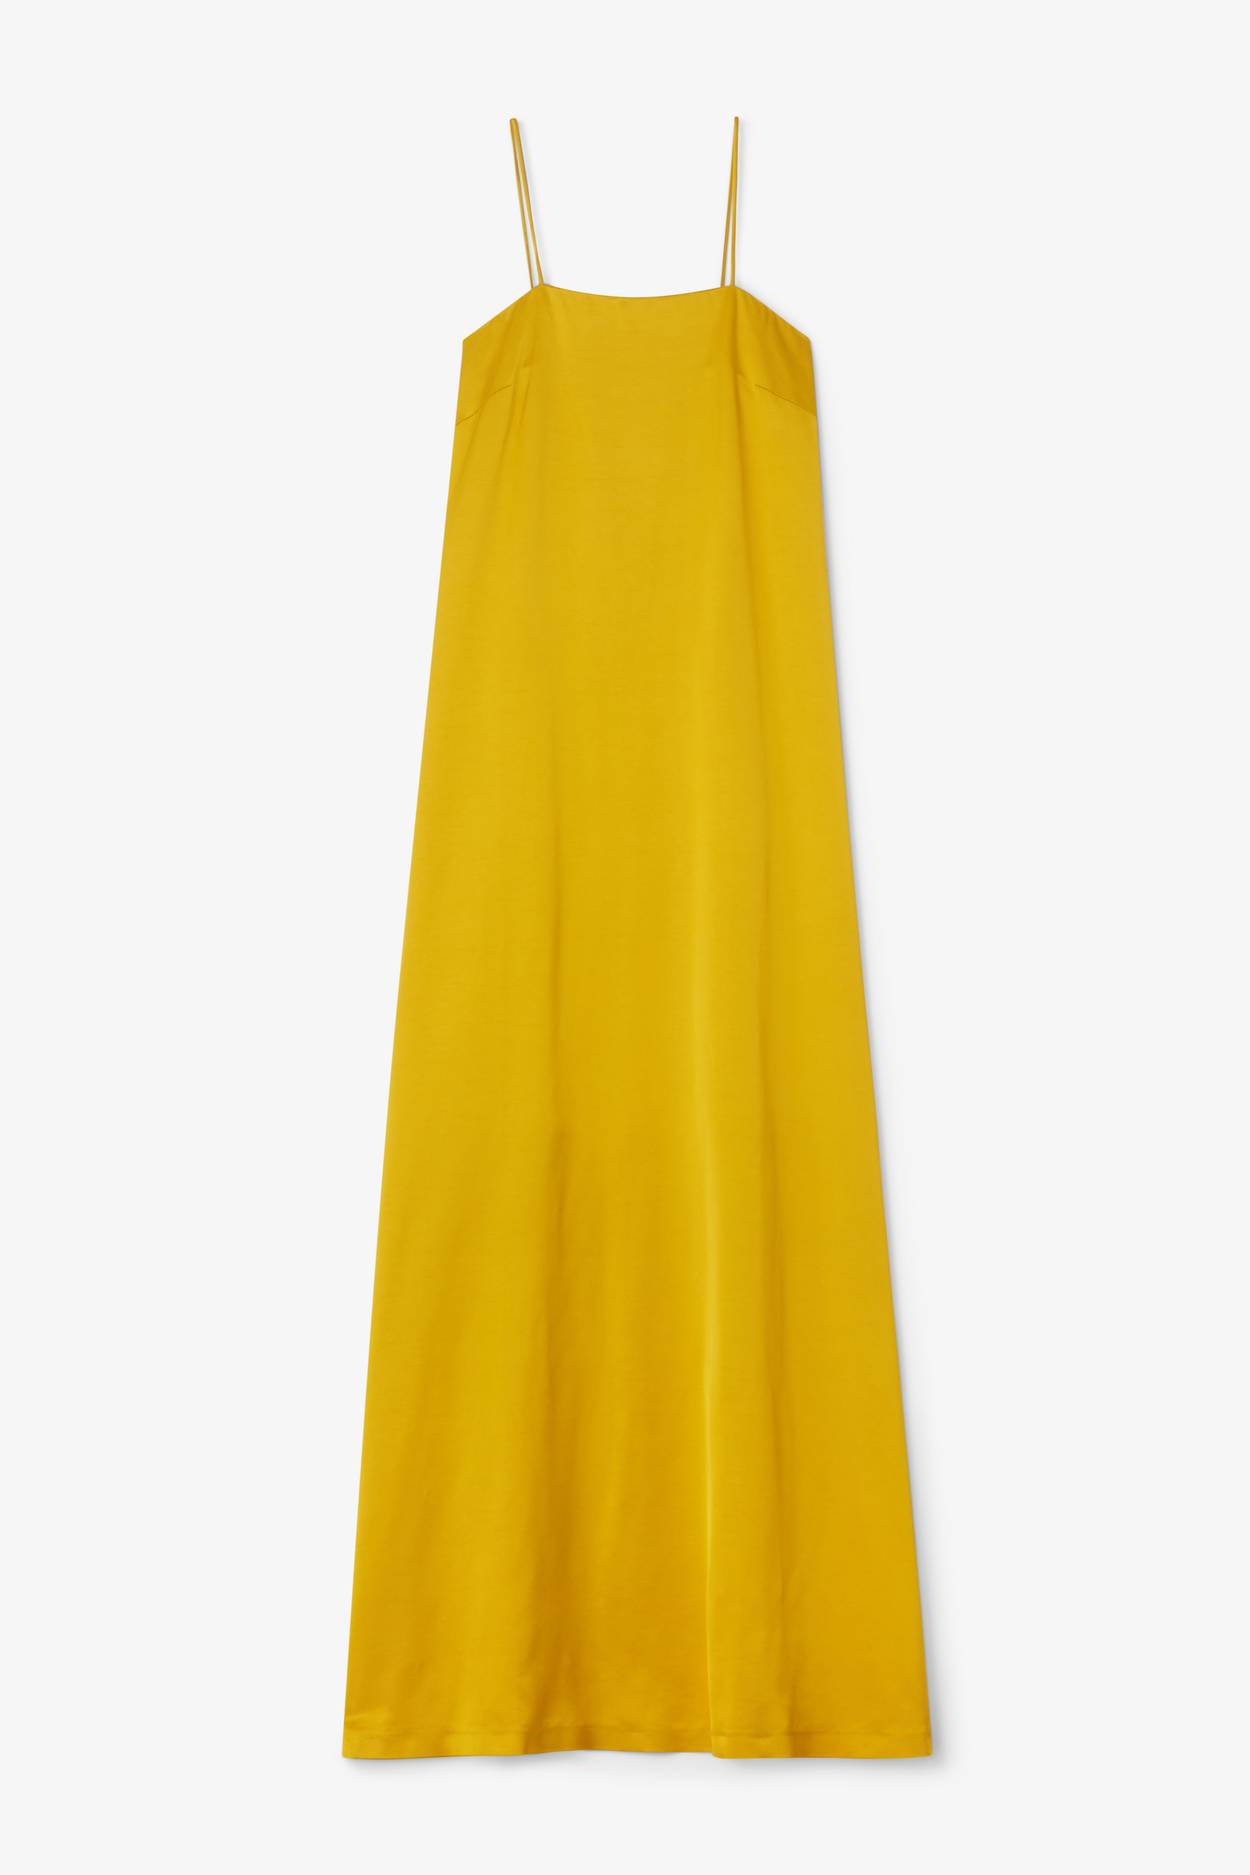 Shiny Tube Dress - Saffron